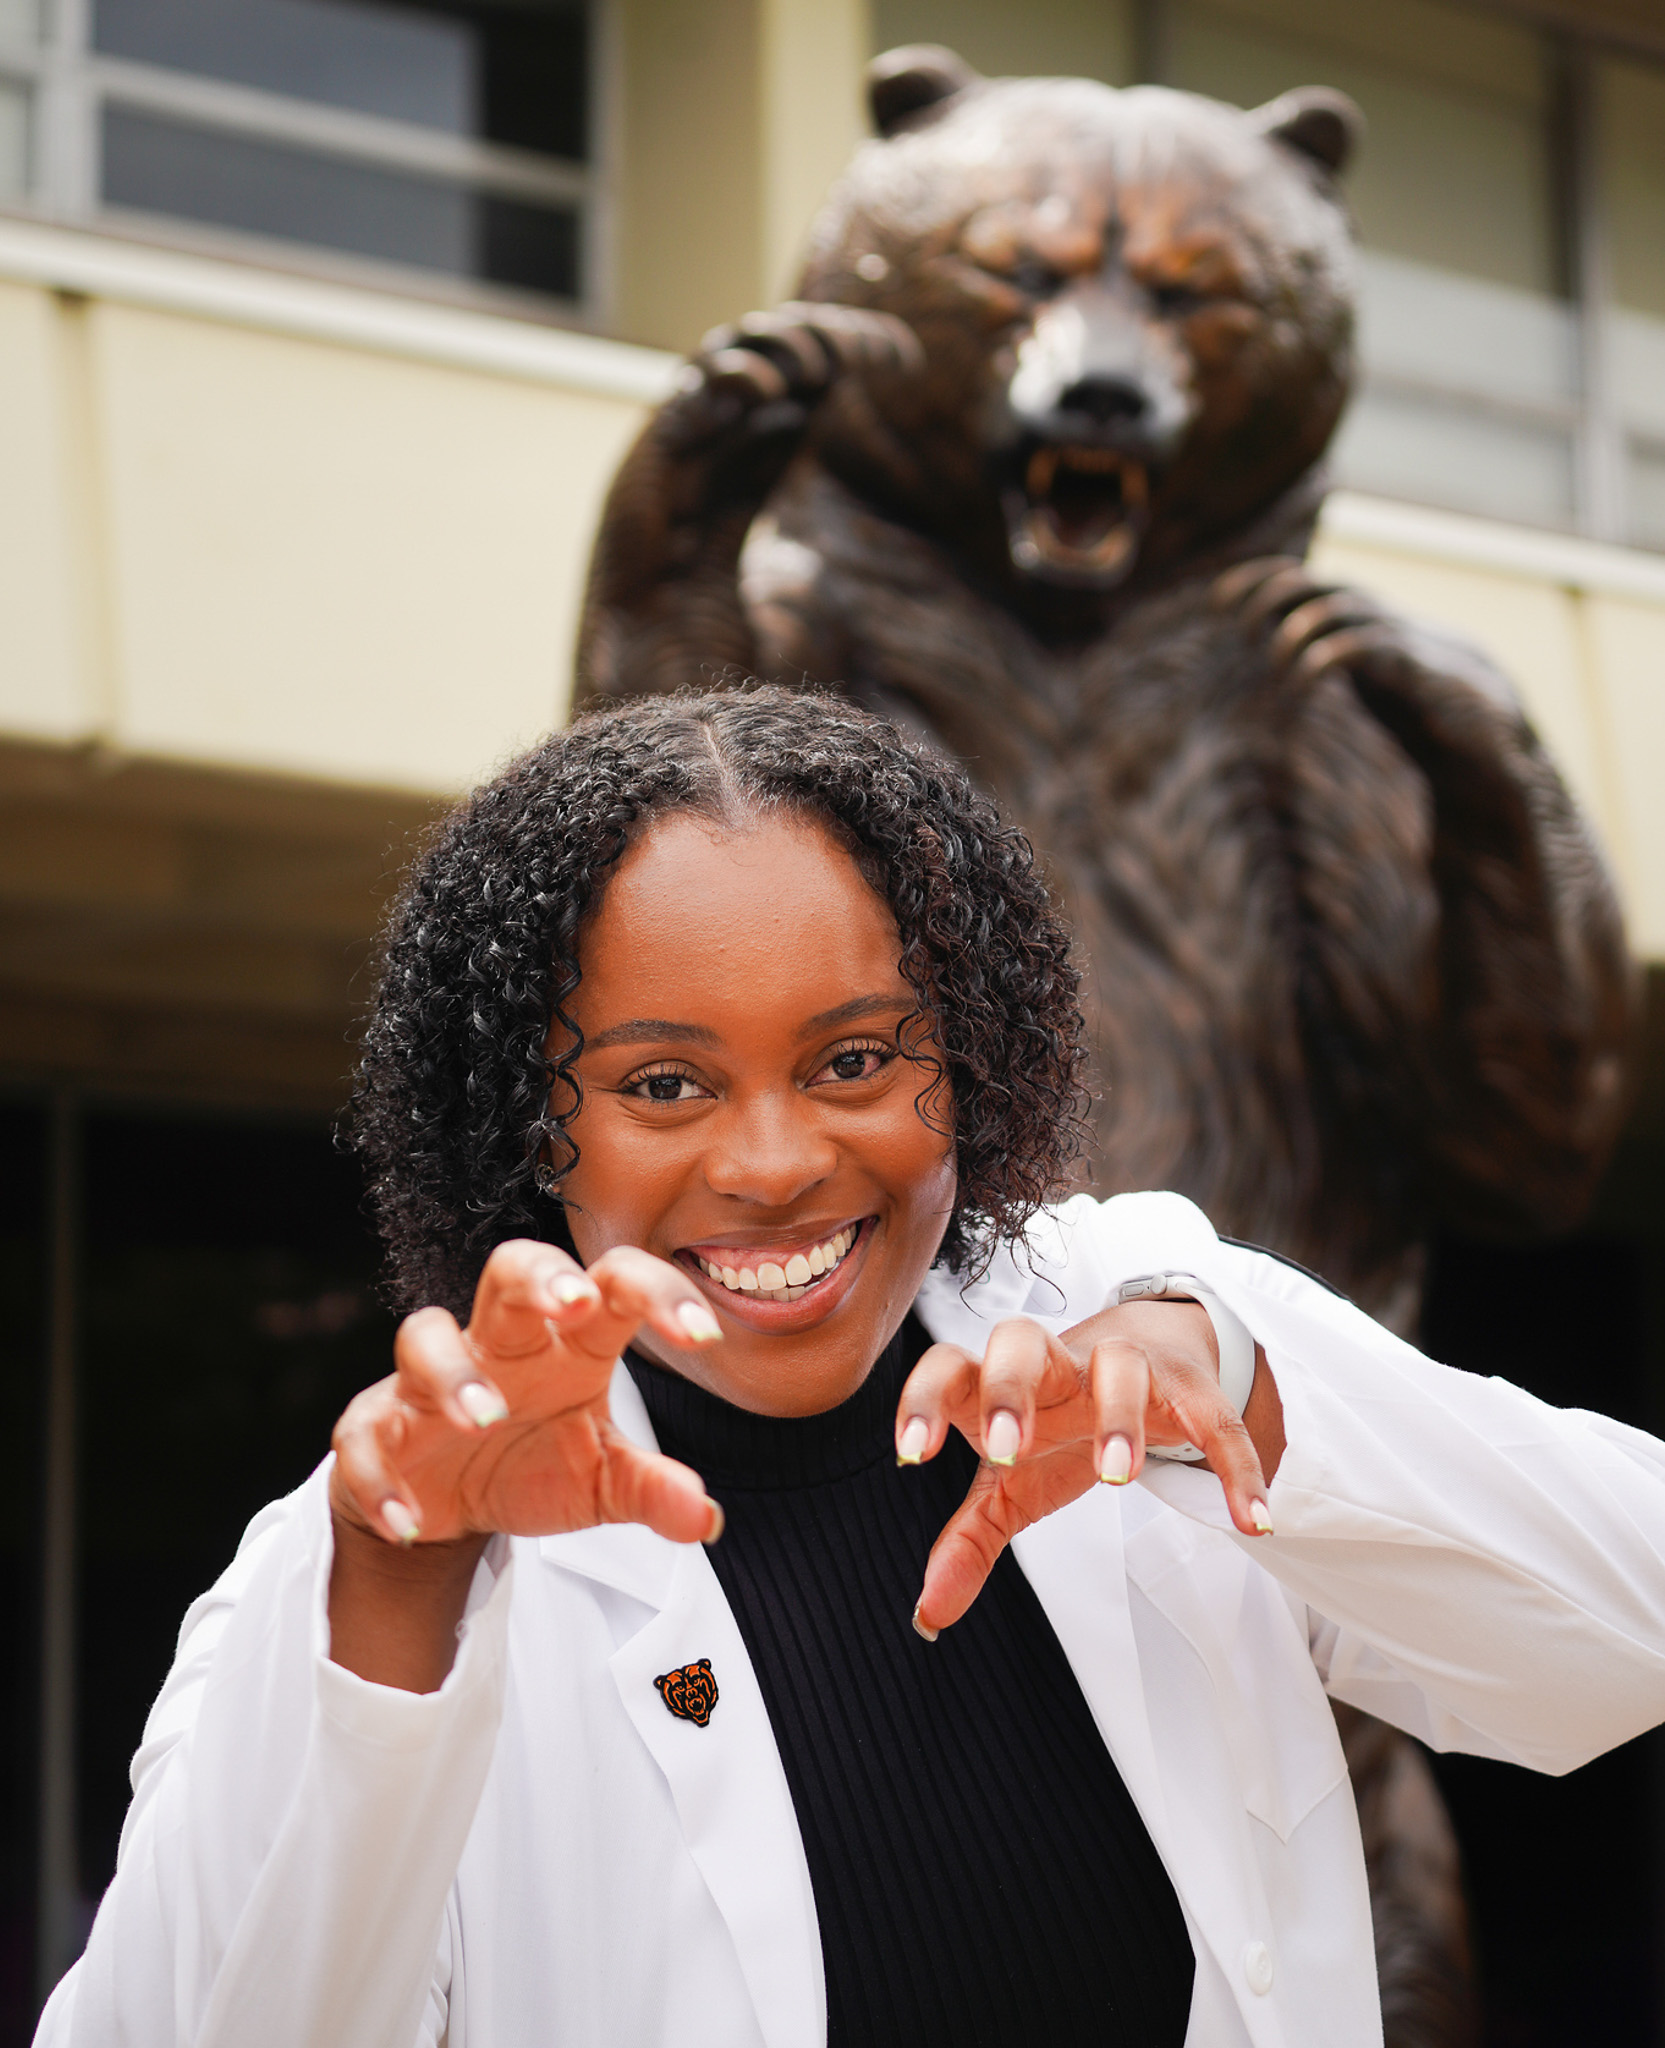 mercer pharmacy student in front of the bear statue. Atlanta, GA